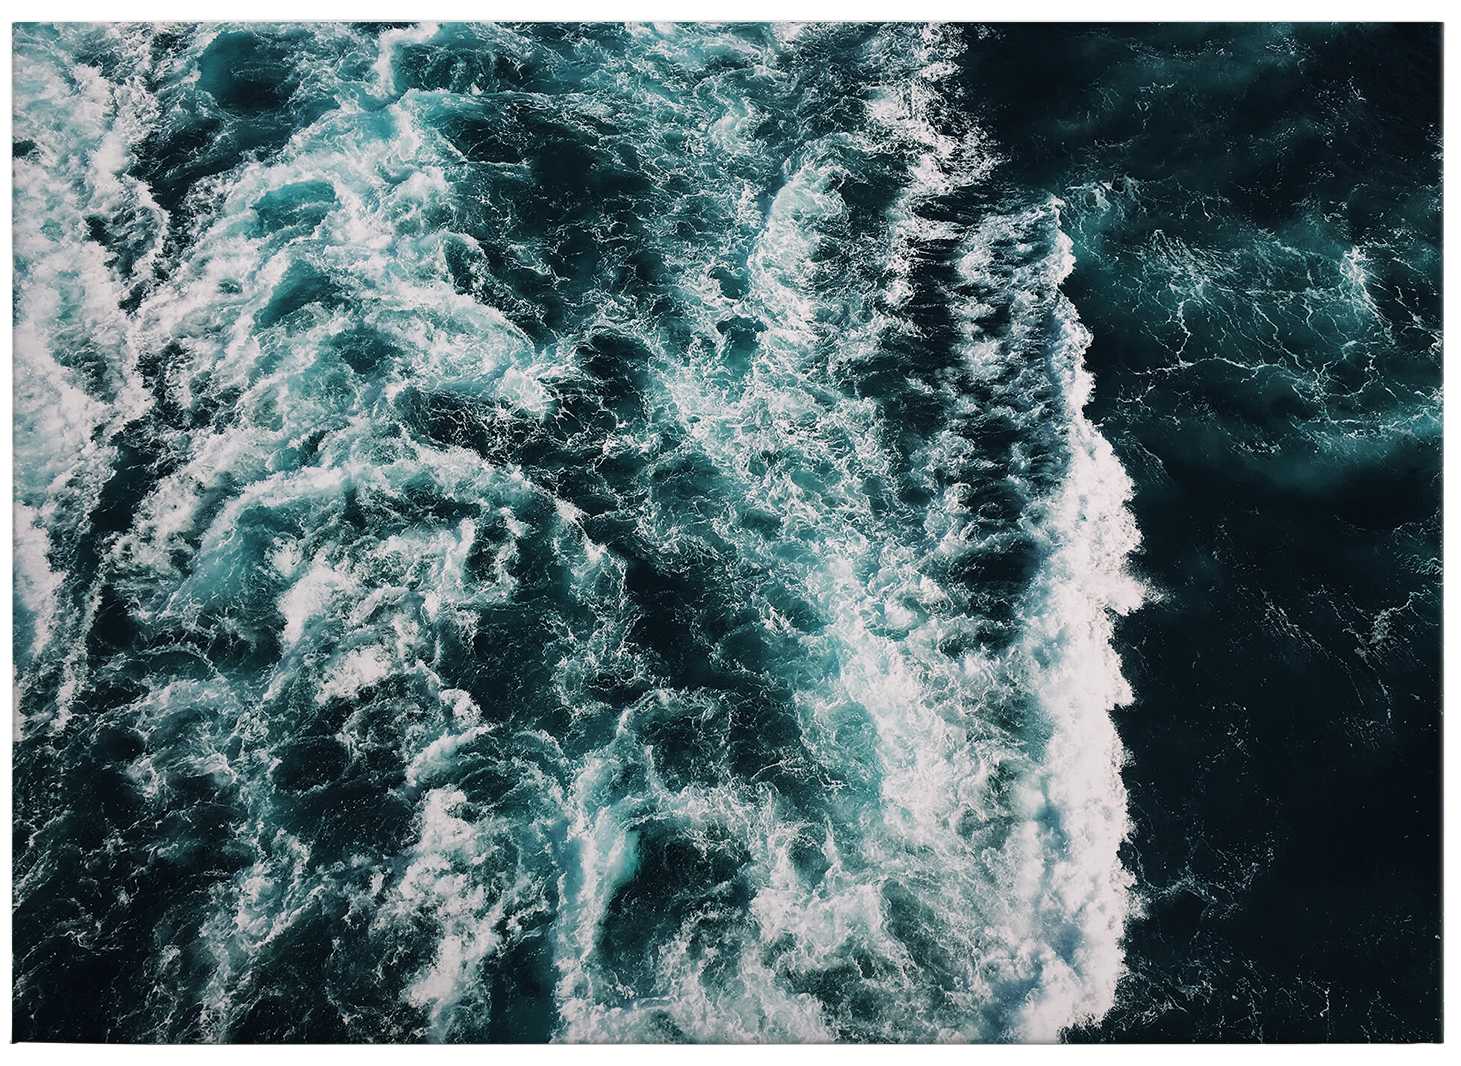             Blue sea canvas print with wave motif
        